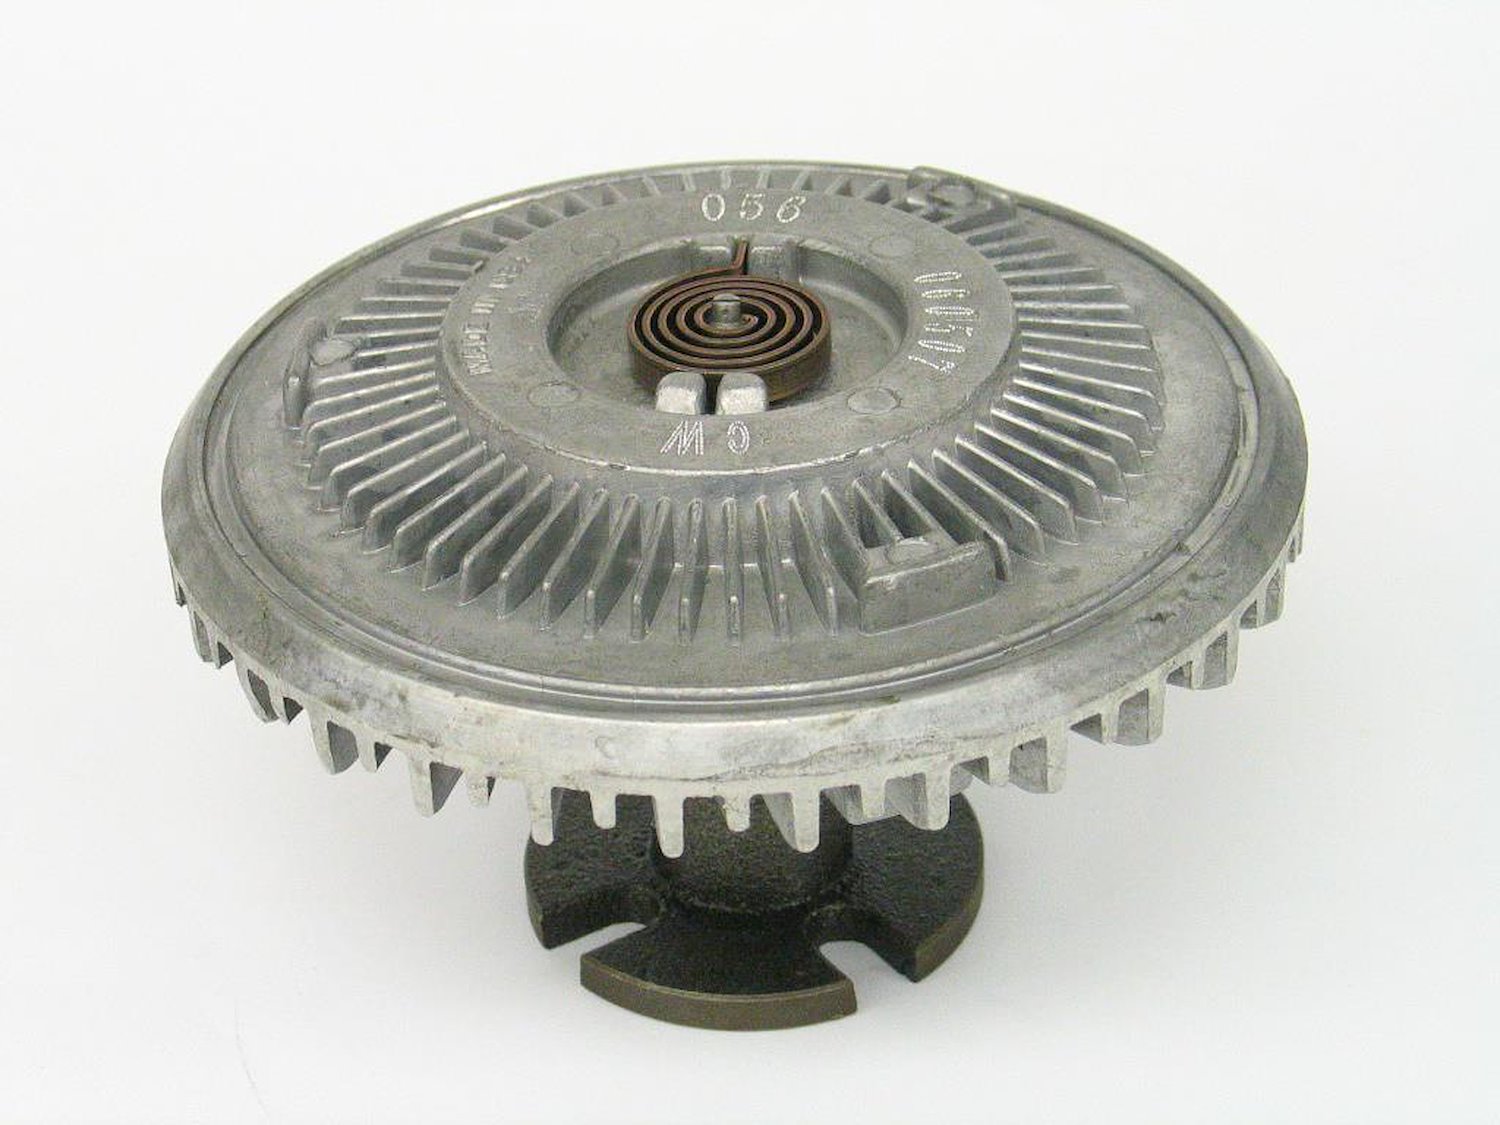 Standard Duty Thermal Fan Clutch for 1985 Chevy